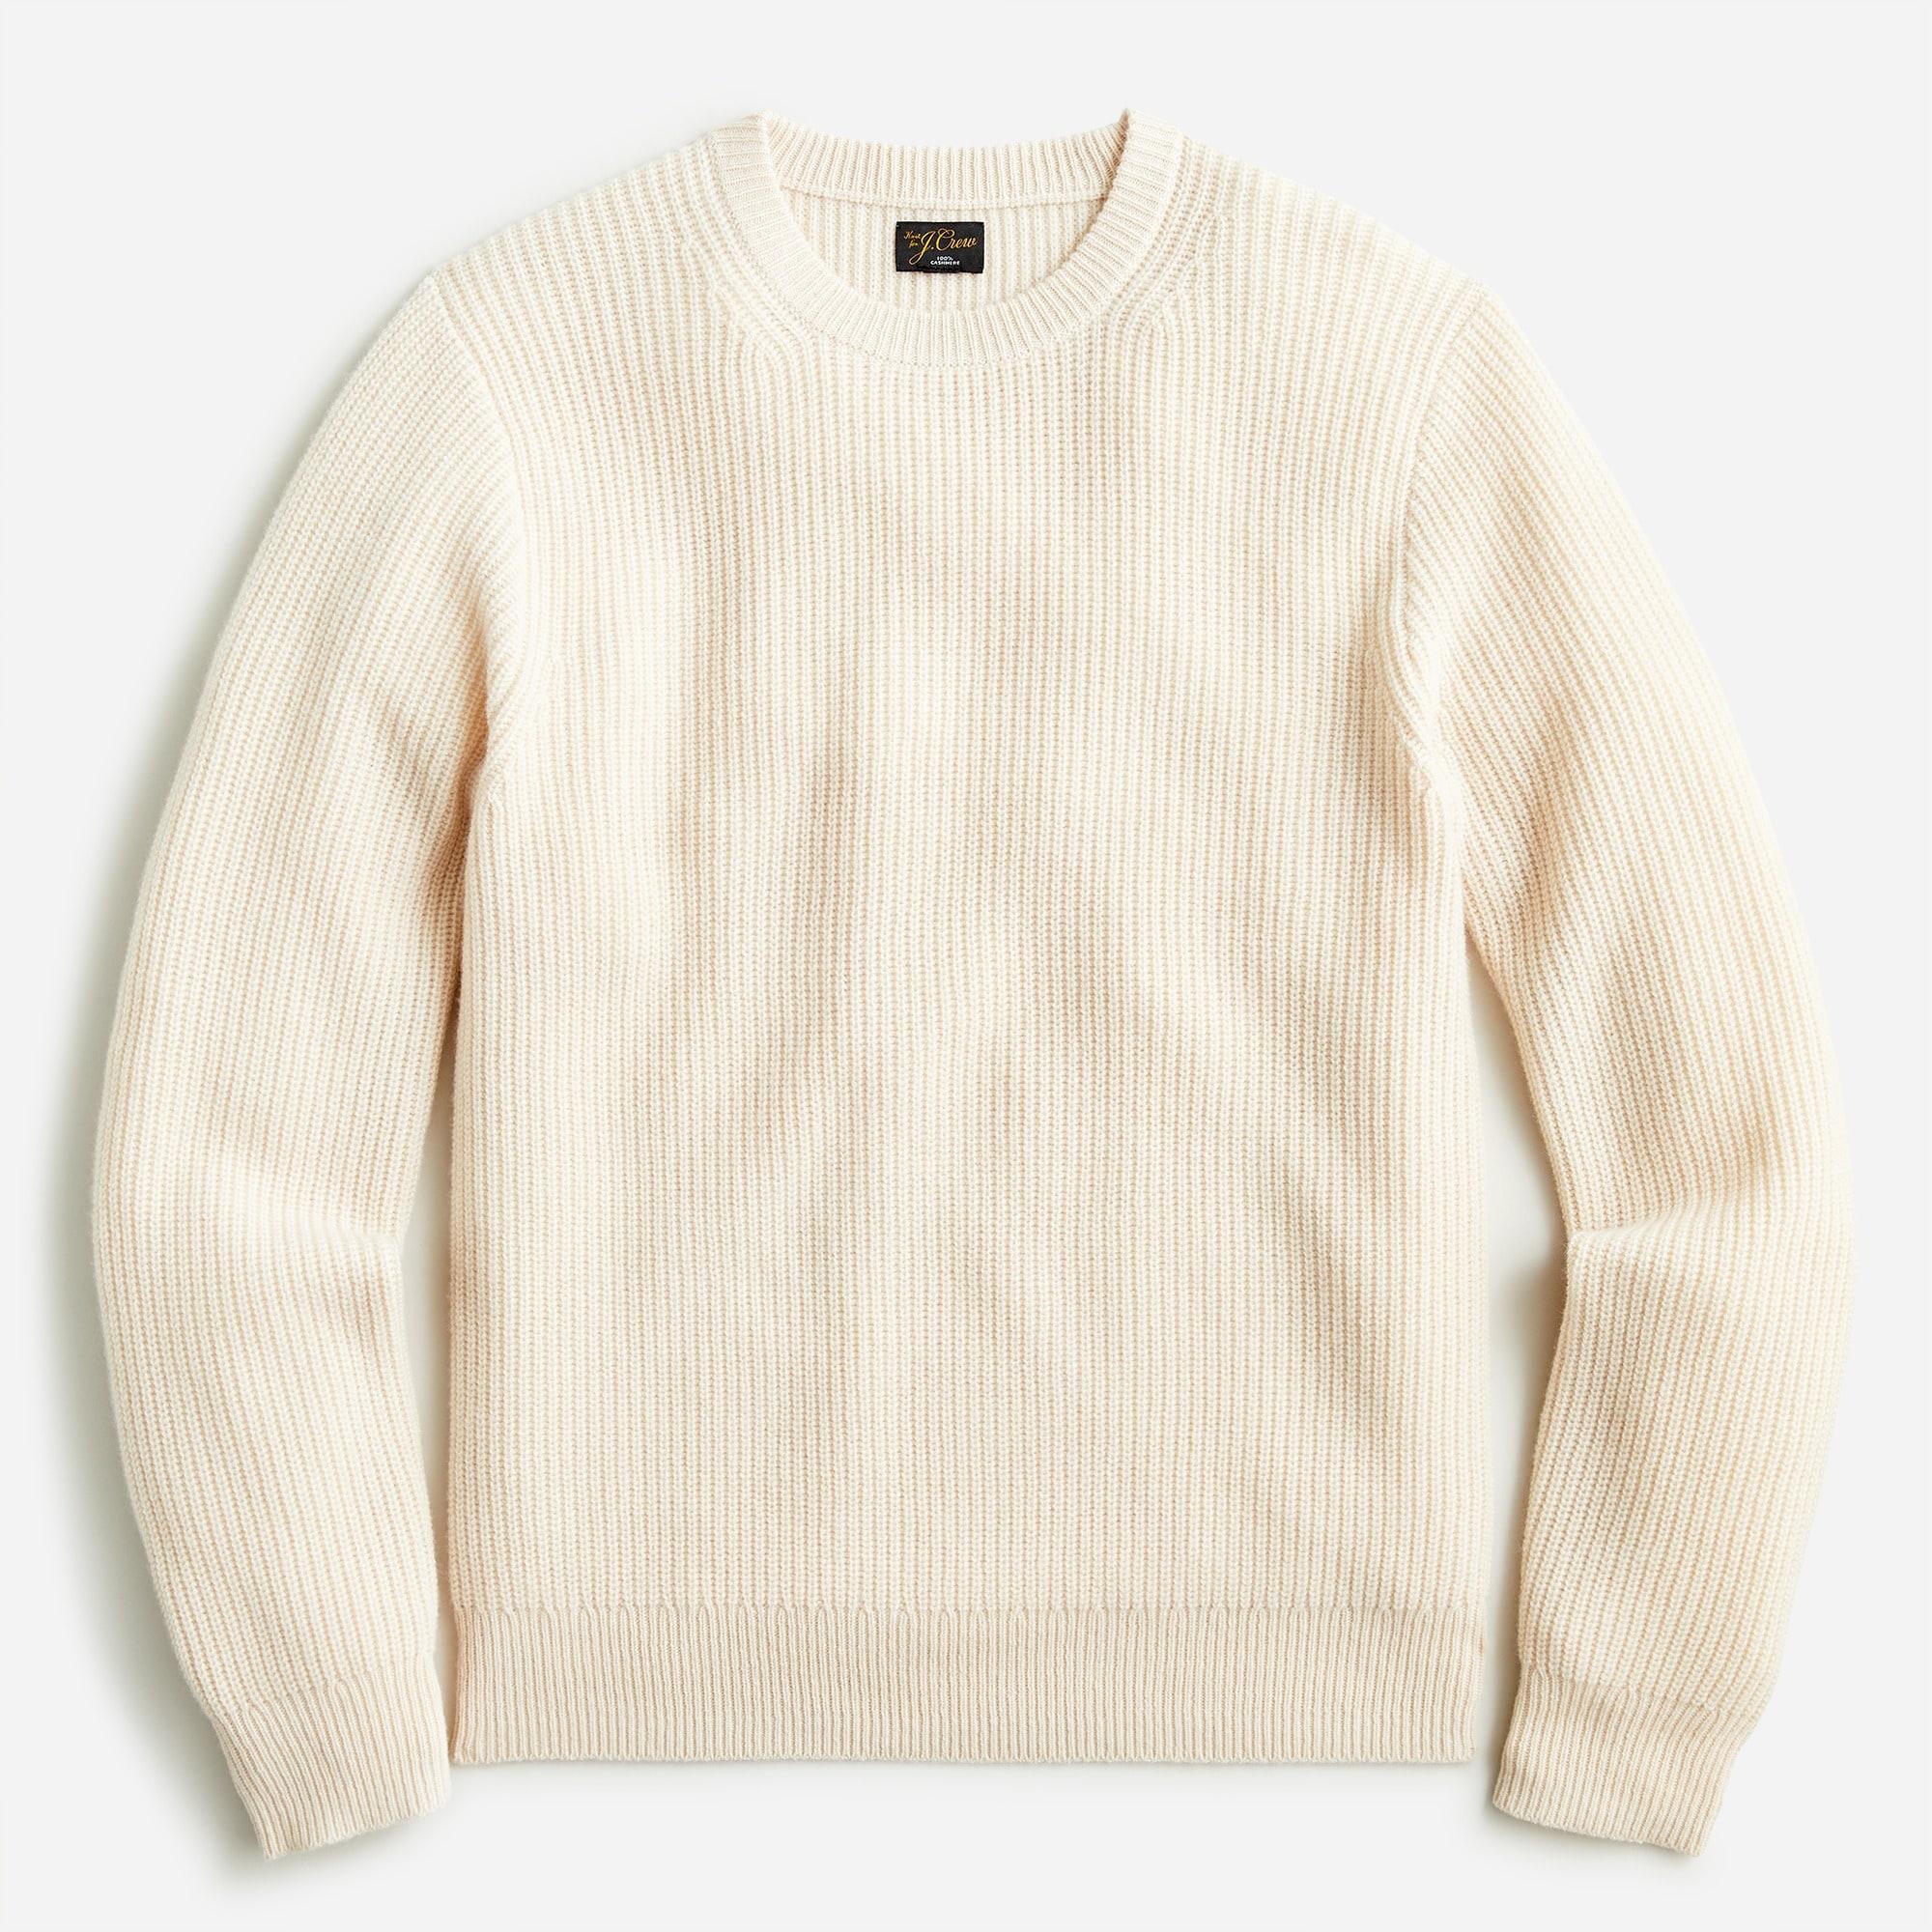 J.Crew Slim Cotton Cashmere Crewneck Sweater, $49, J.Crew